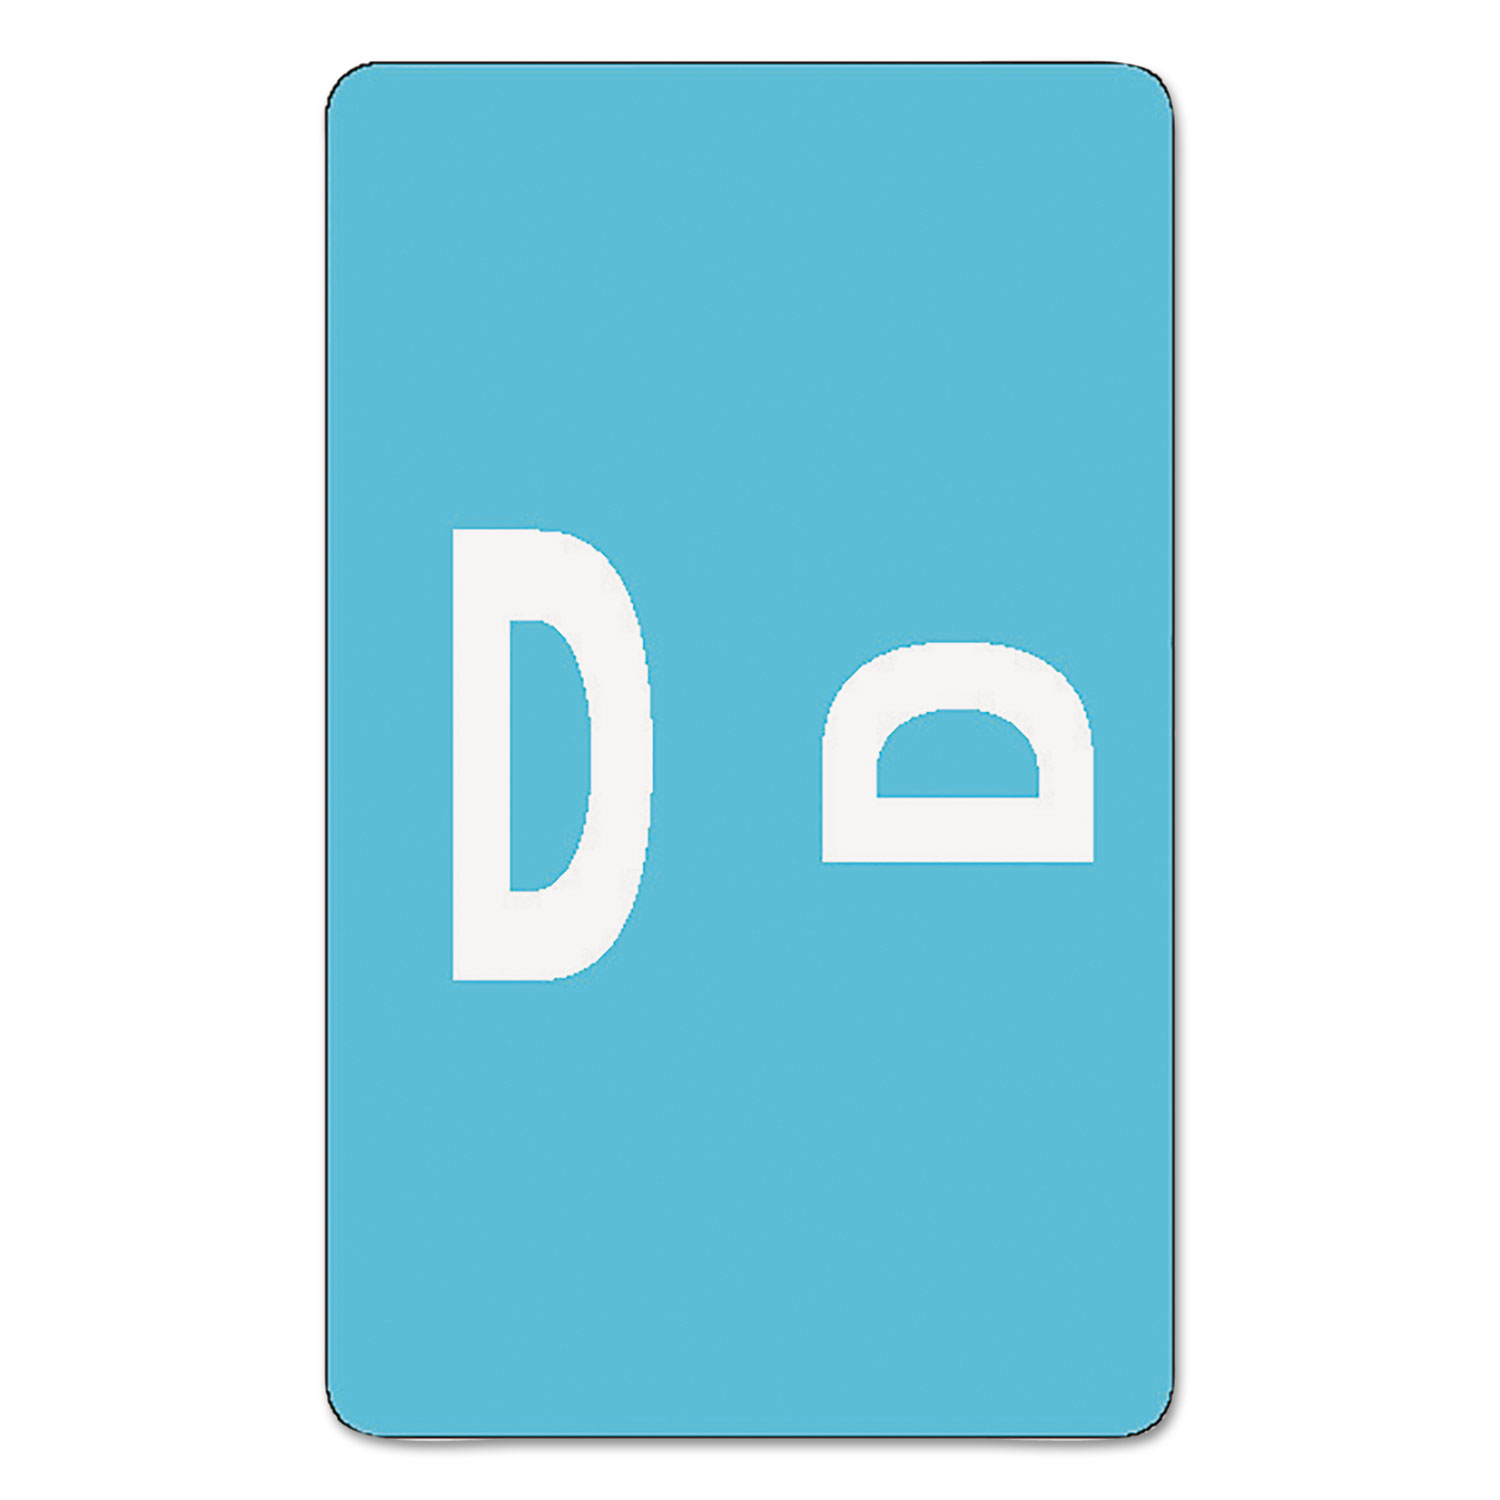  Smead 67174 AlphaZ Color-Coded Second Letter Alphabetical Labels, D, 1 x 1.63, Light Blue, 10/Sheet, 10 Sheets/Pack (SMD67174) 